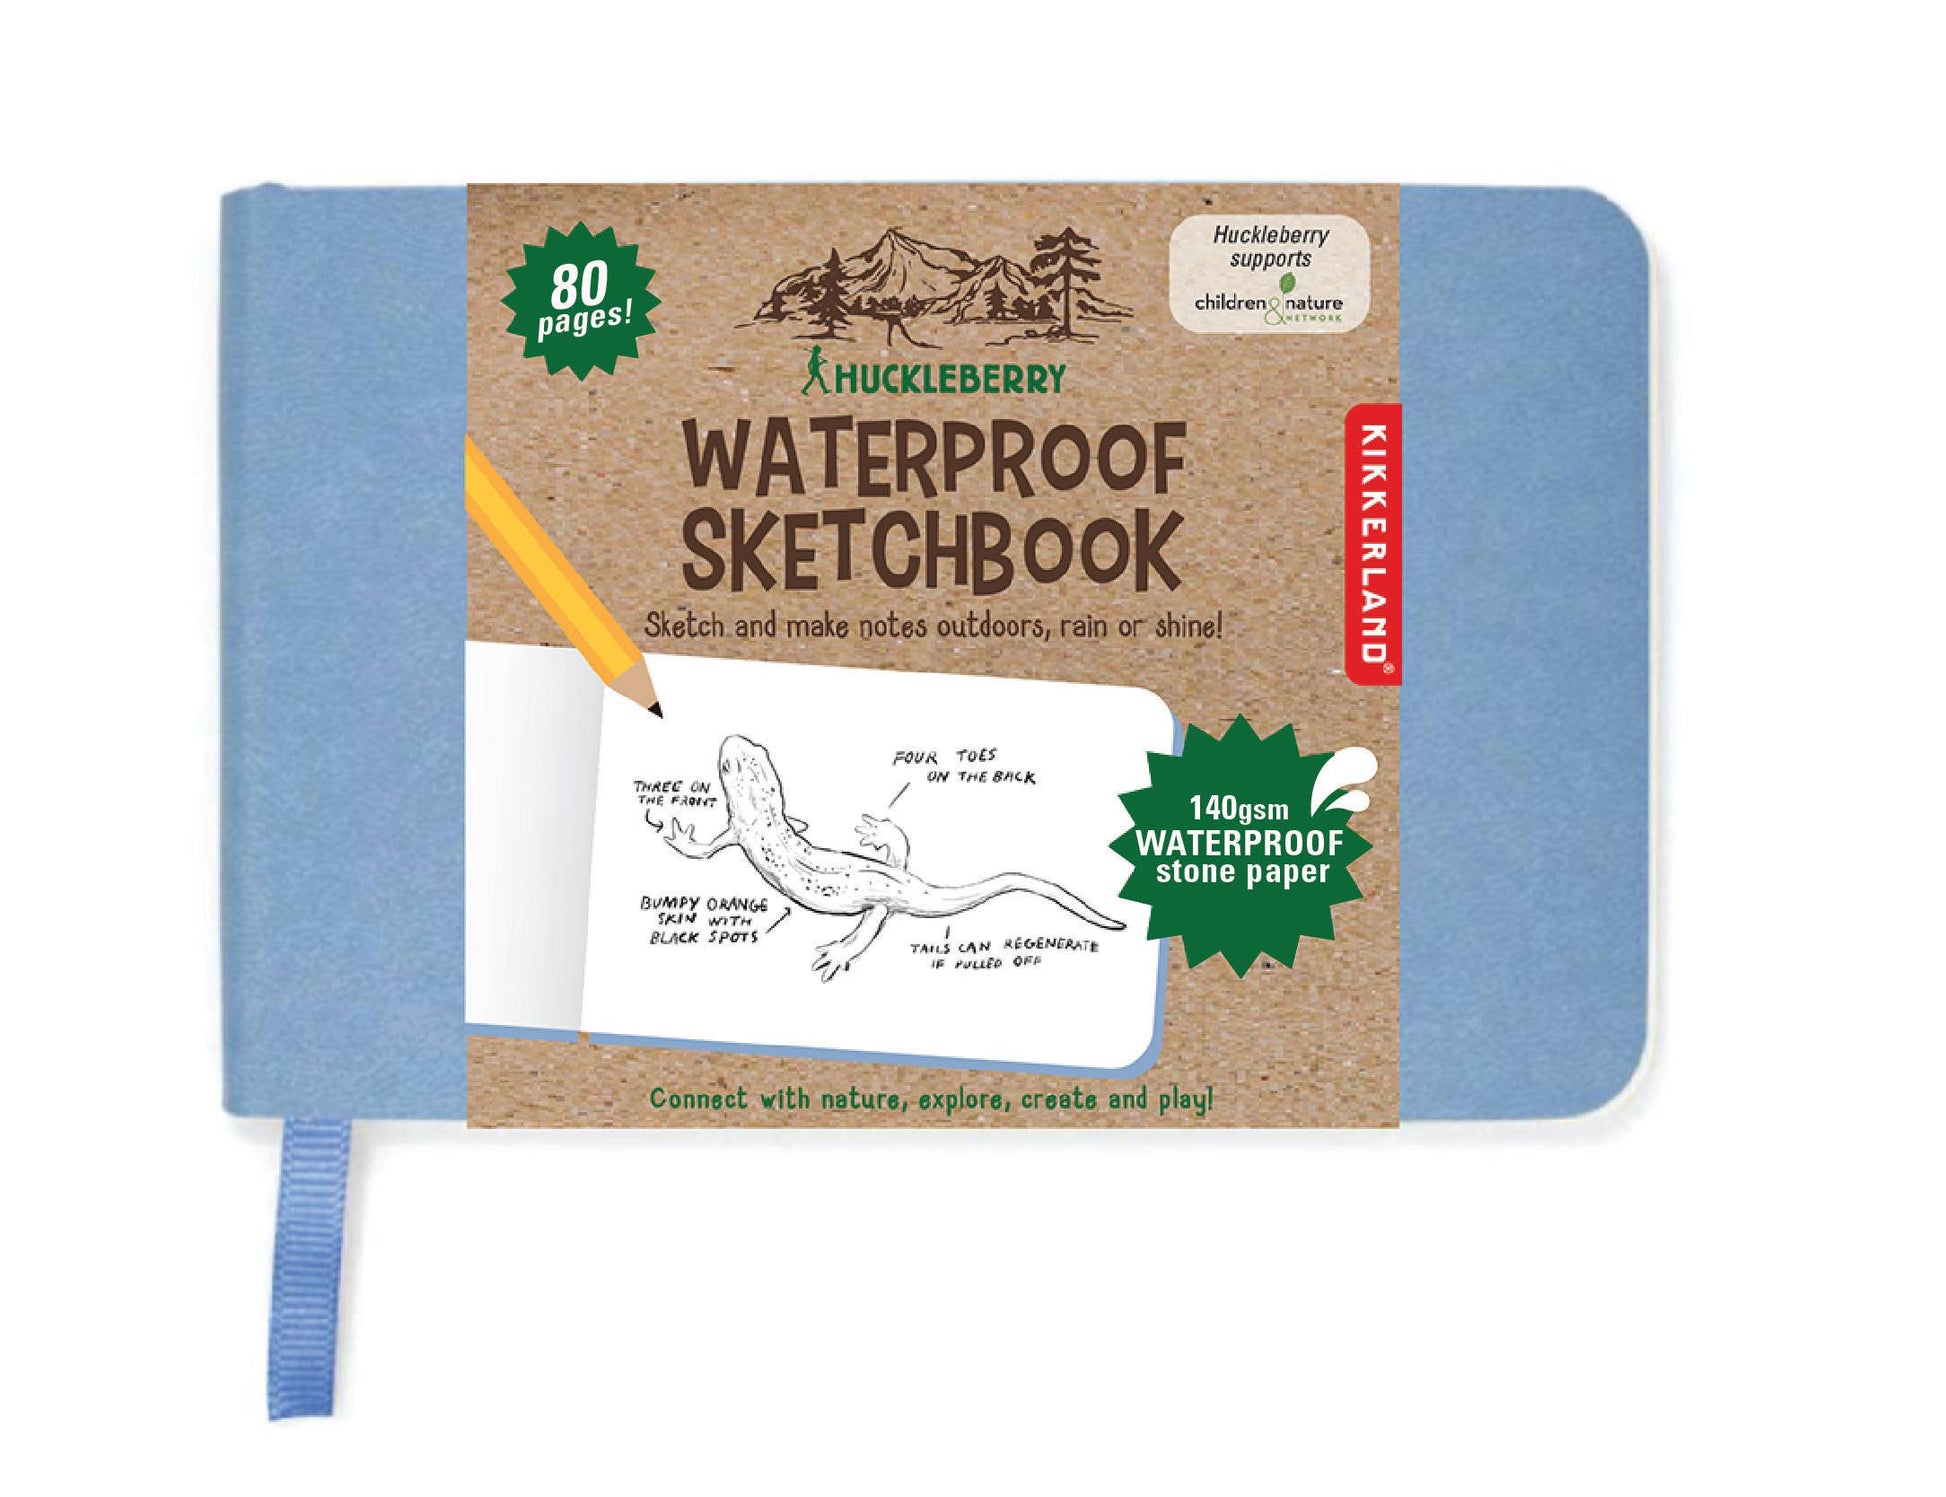 Huckleberry Waterproof Sketchbook - Einstein's Attic